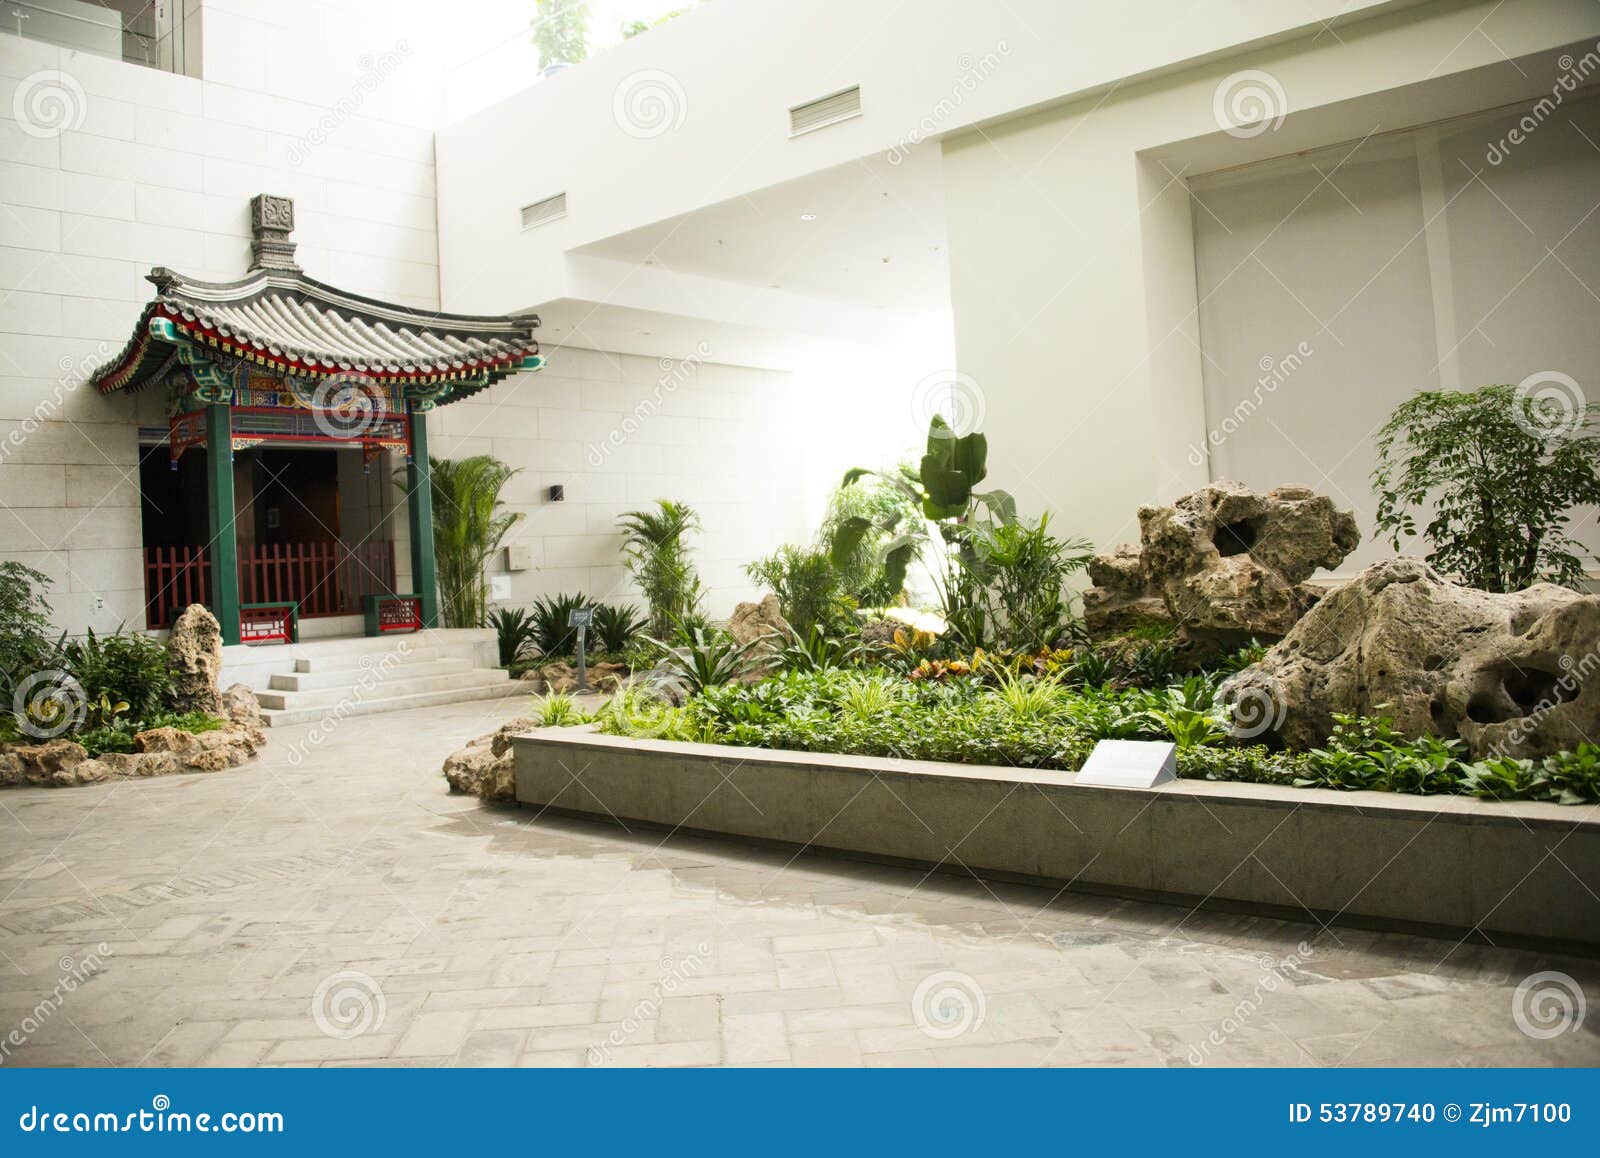 Asia Chinese Beijing China Garden Museum Indoor Exhibition Hall